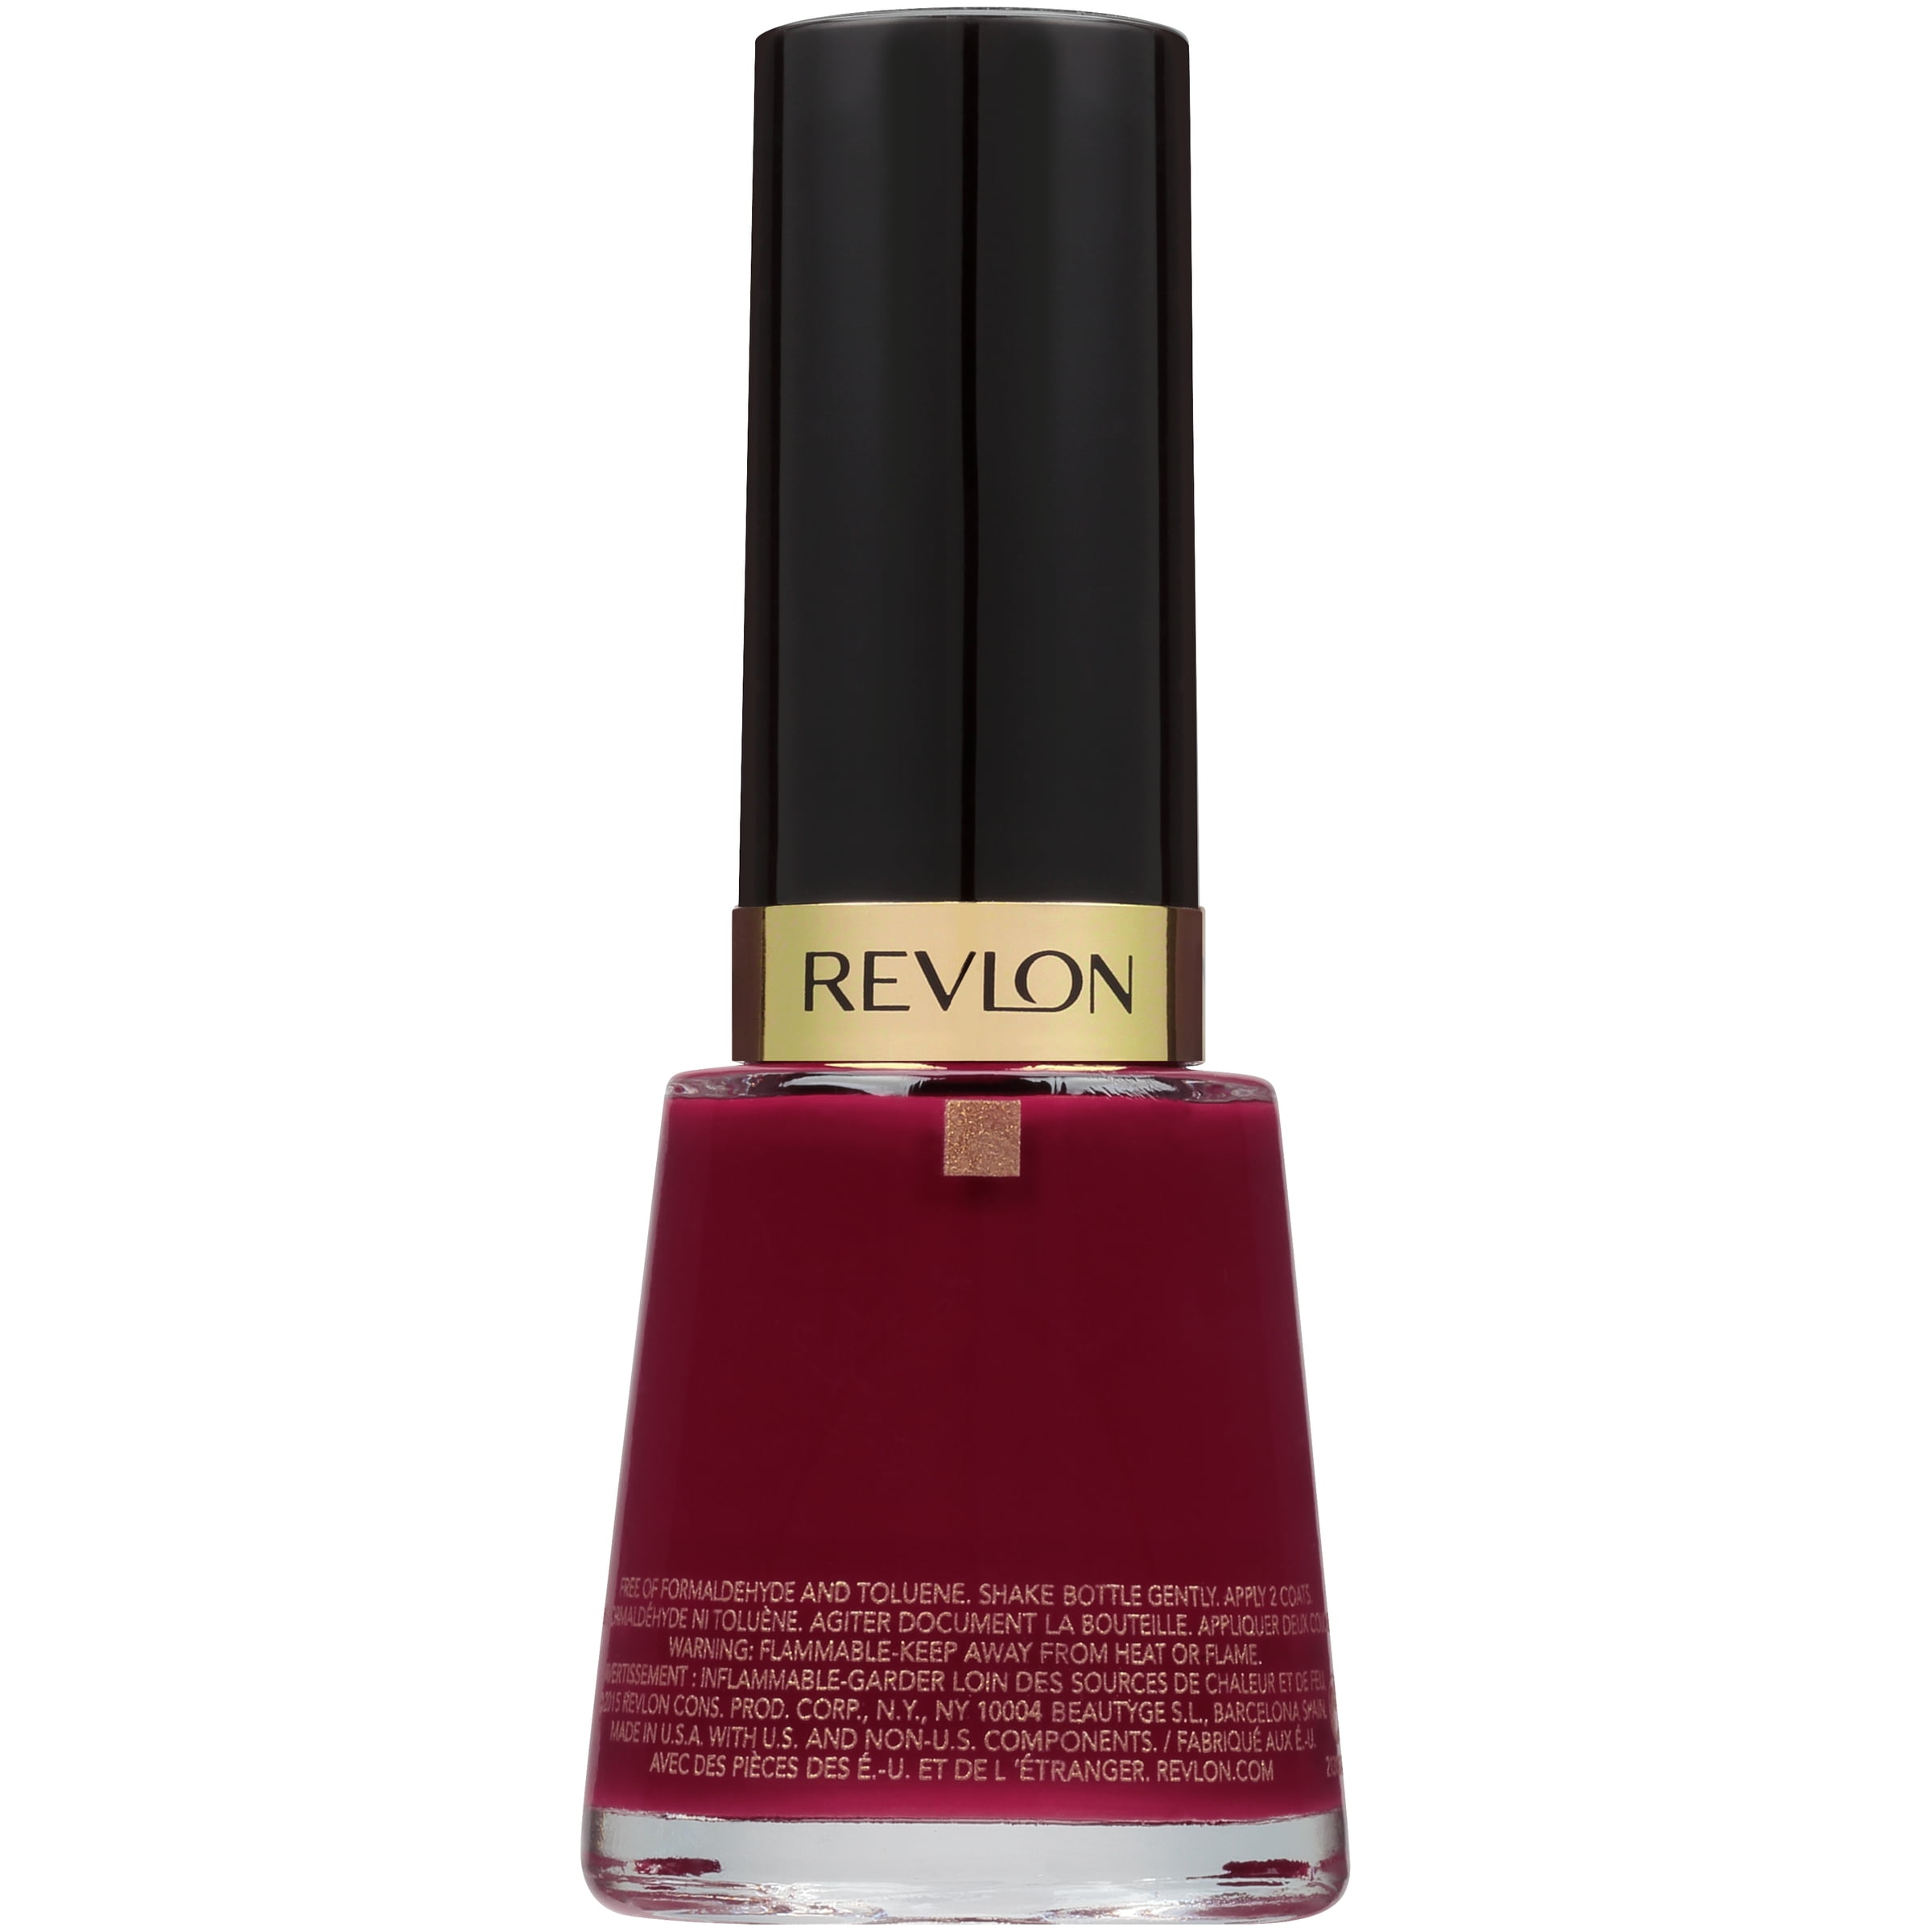 Revlon Nail Enamel, Vixen, smooth color - Walmart.com